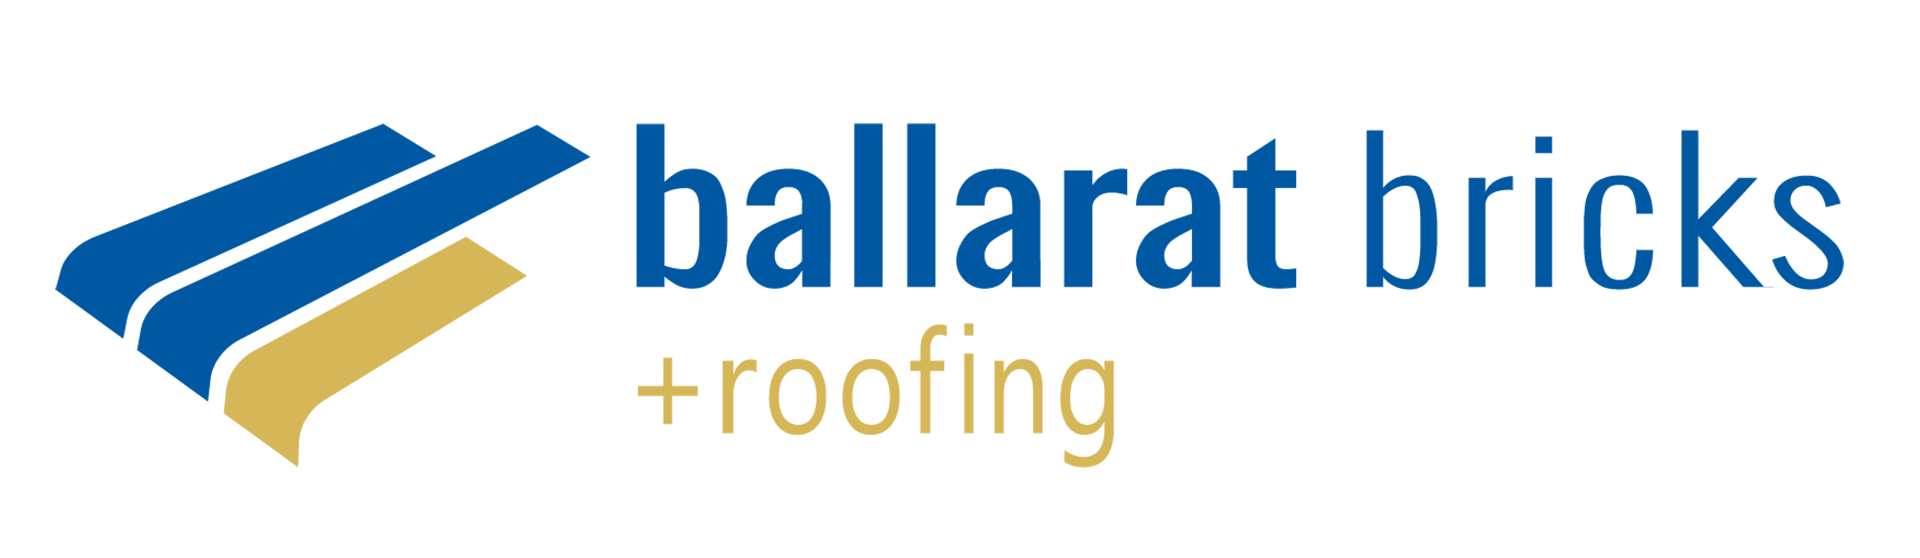 ballarat brick roofing logo